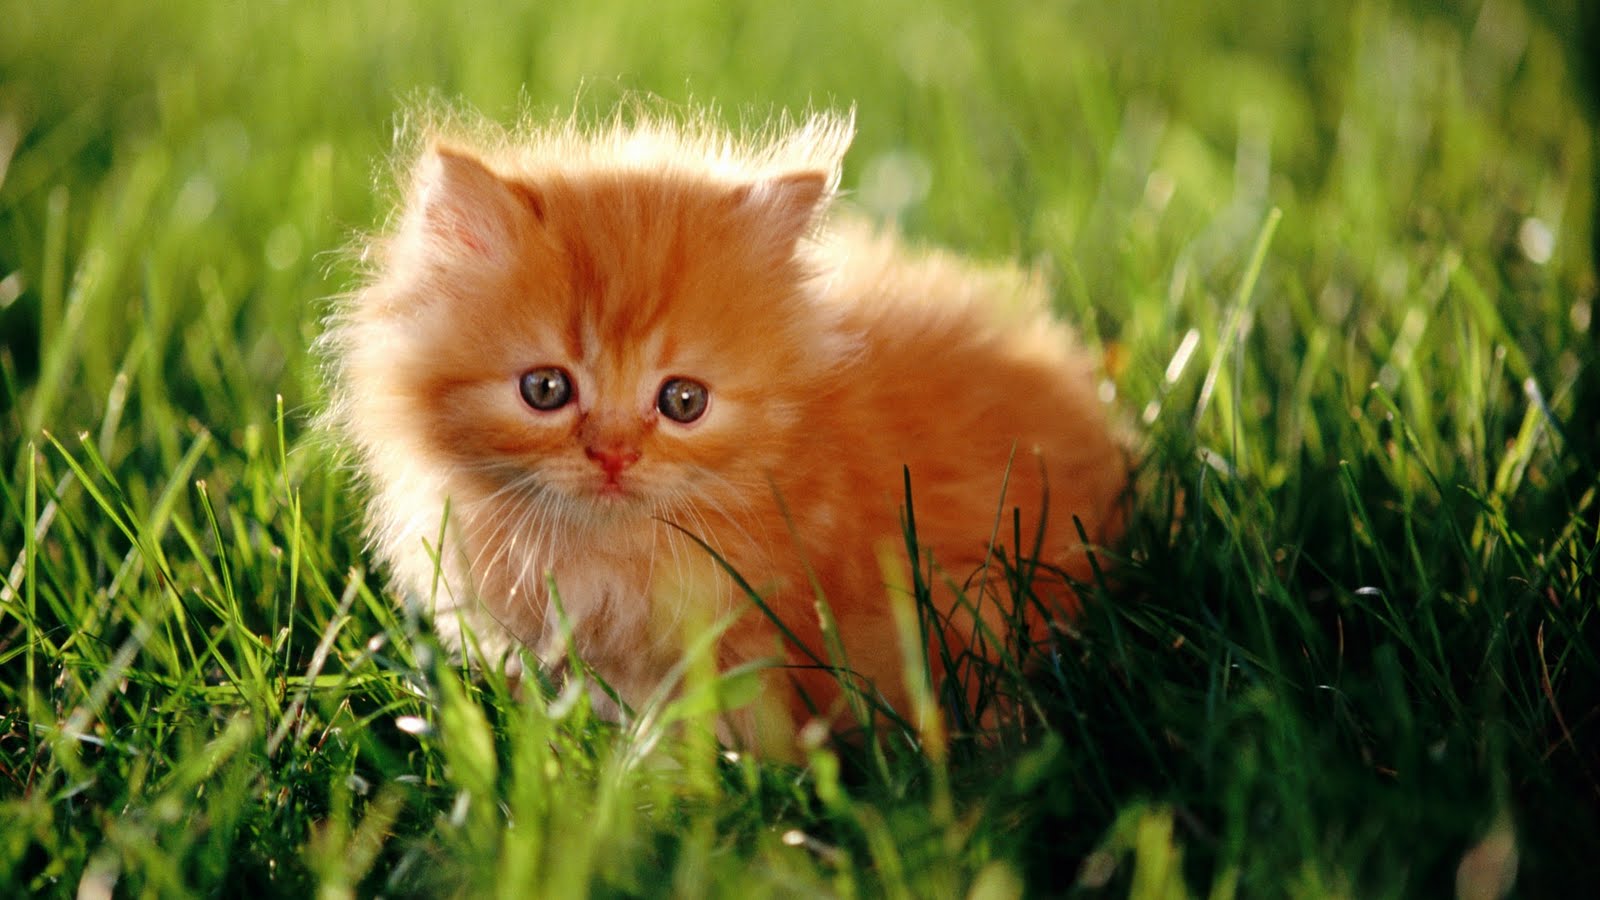 How To Download - Orange Kitten In Grass - HD Wallpaper 